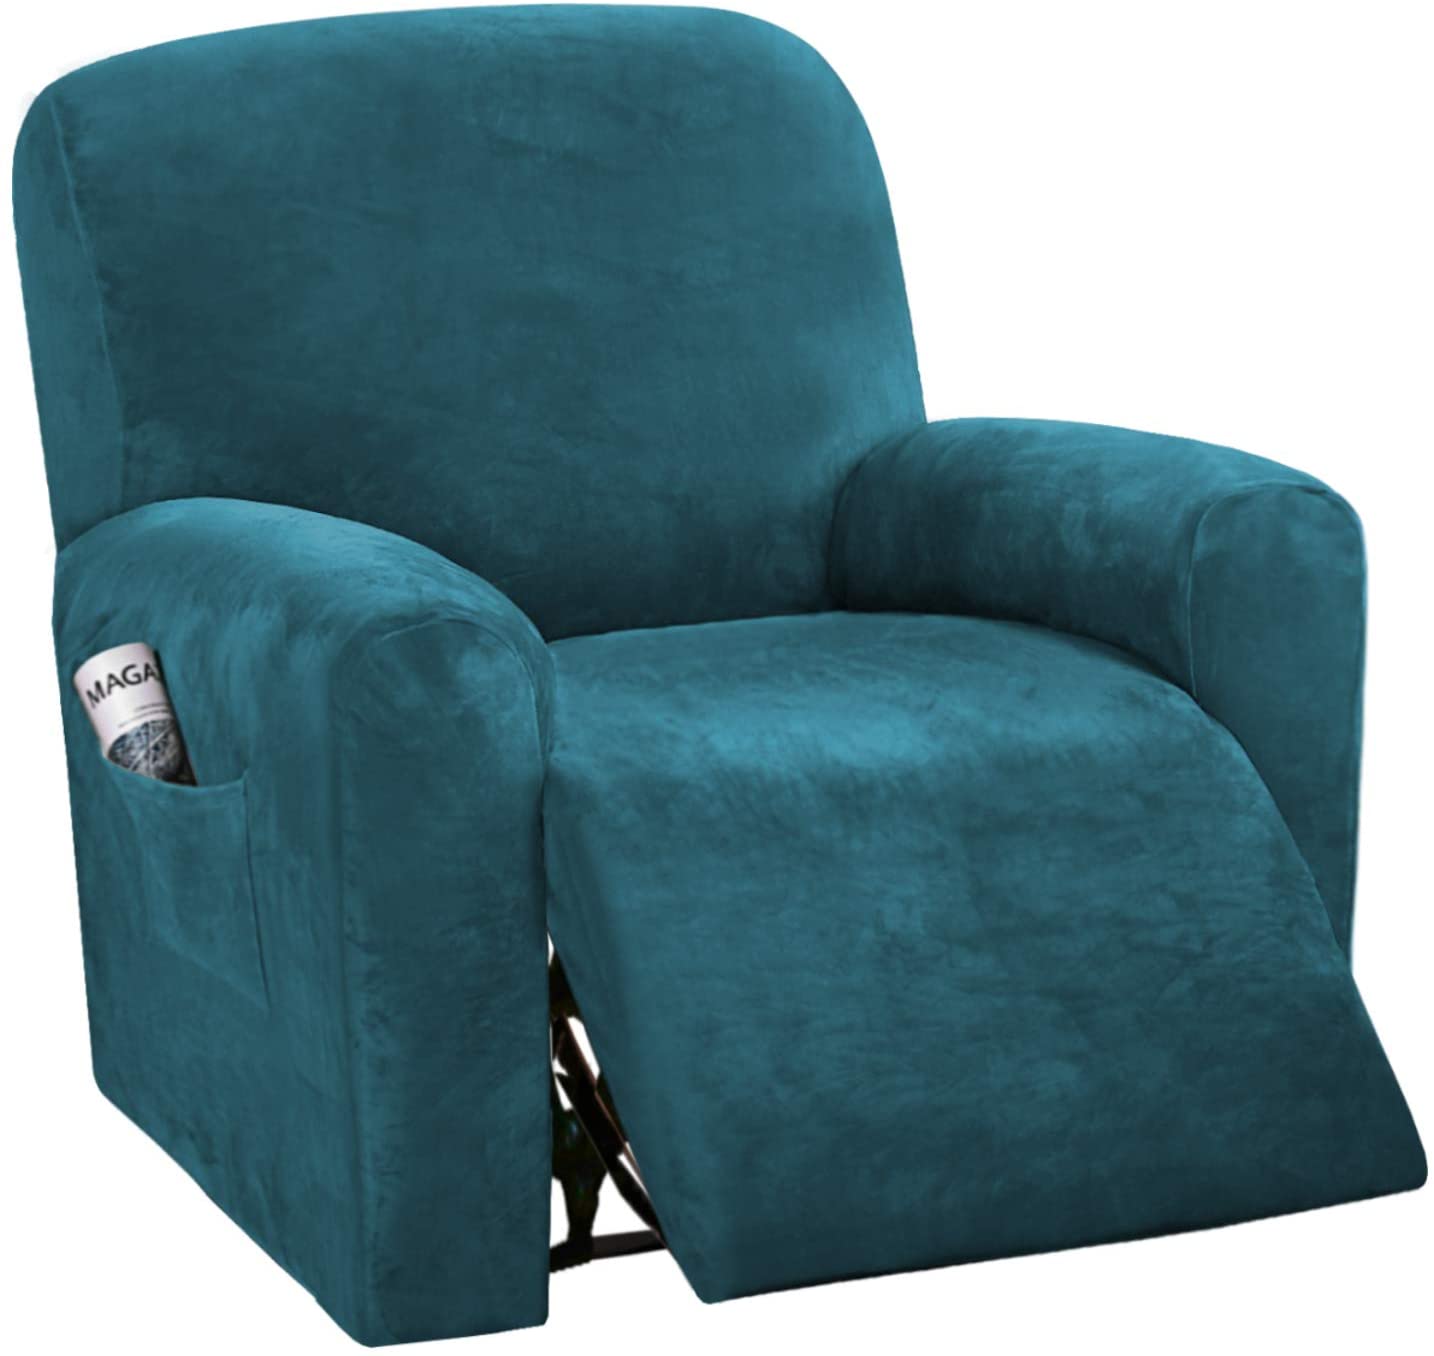 H.VERSAILTEX Stretch Velvet Armchair Cover Couch Covers 1 Cushion Chair Slipcove